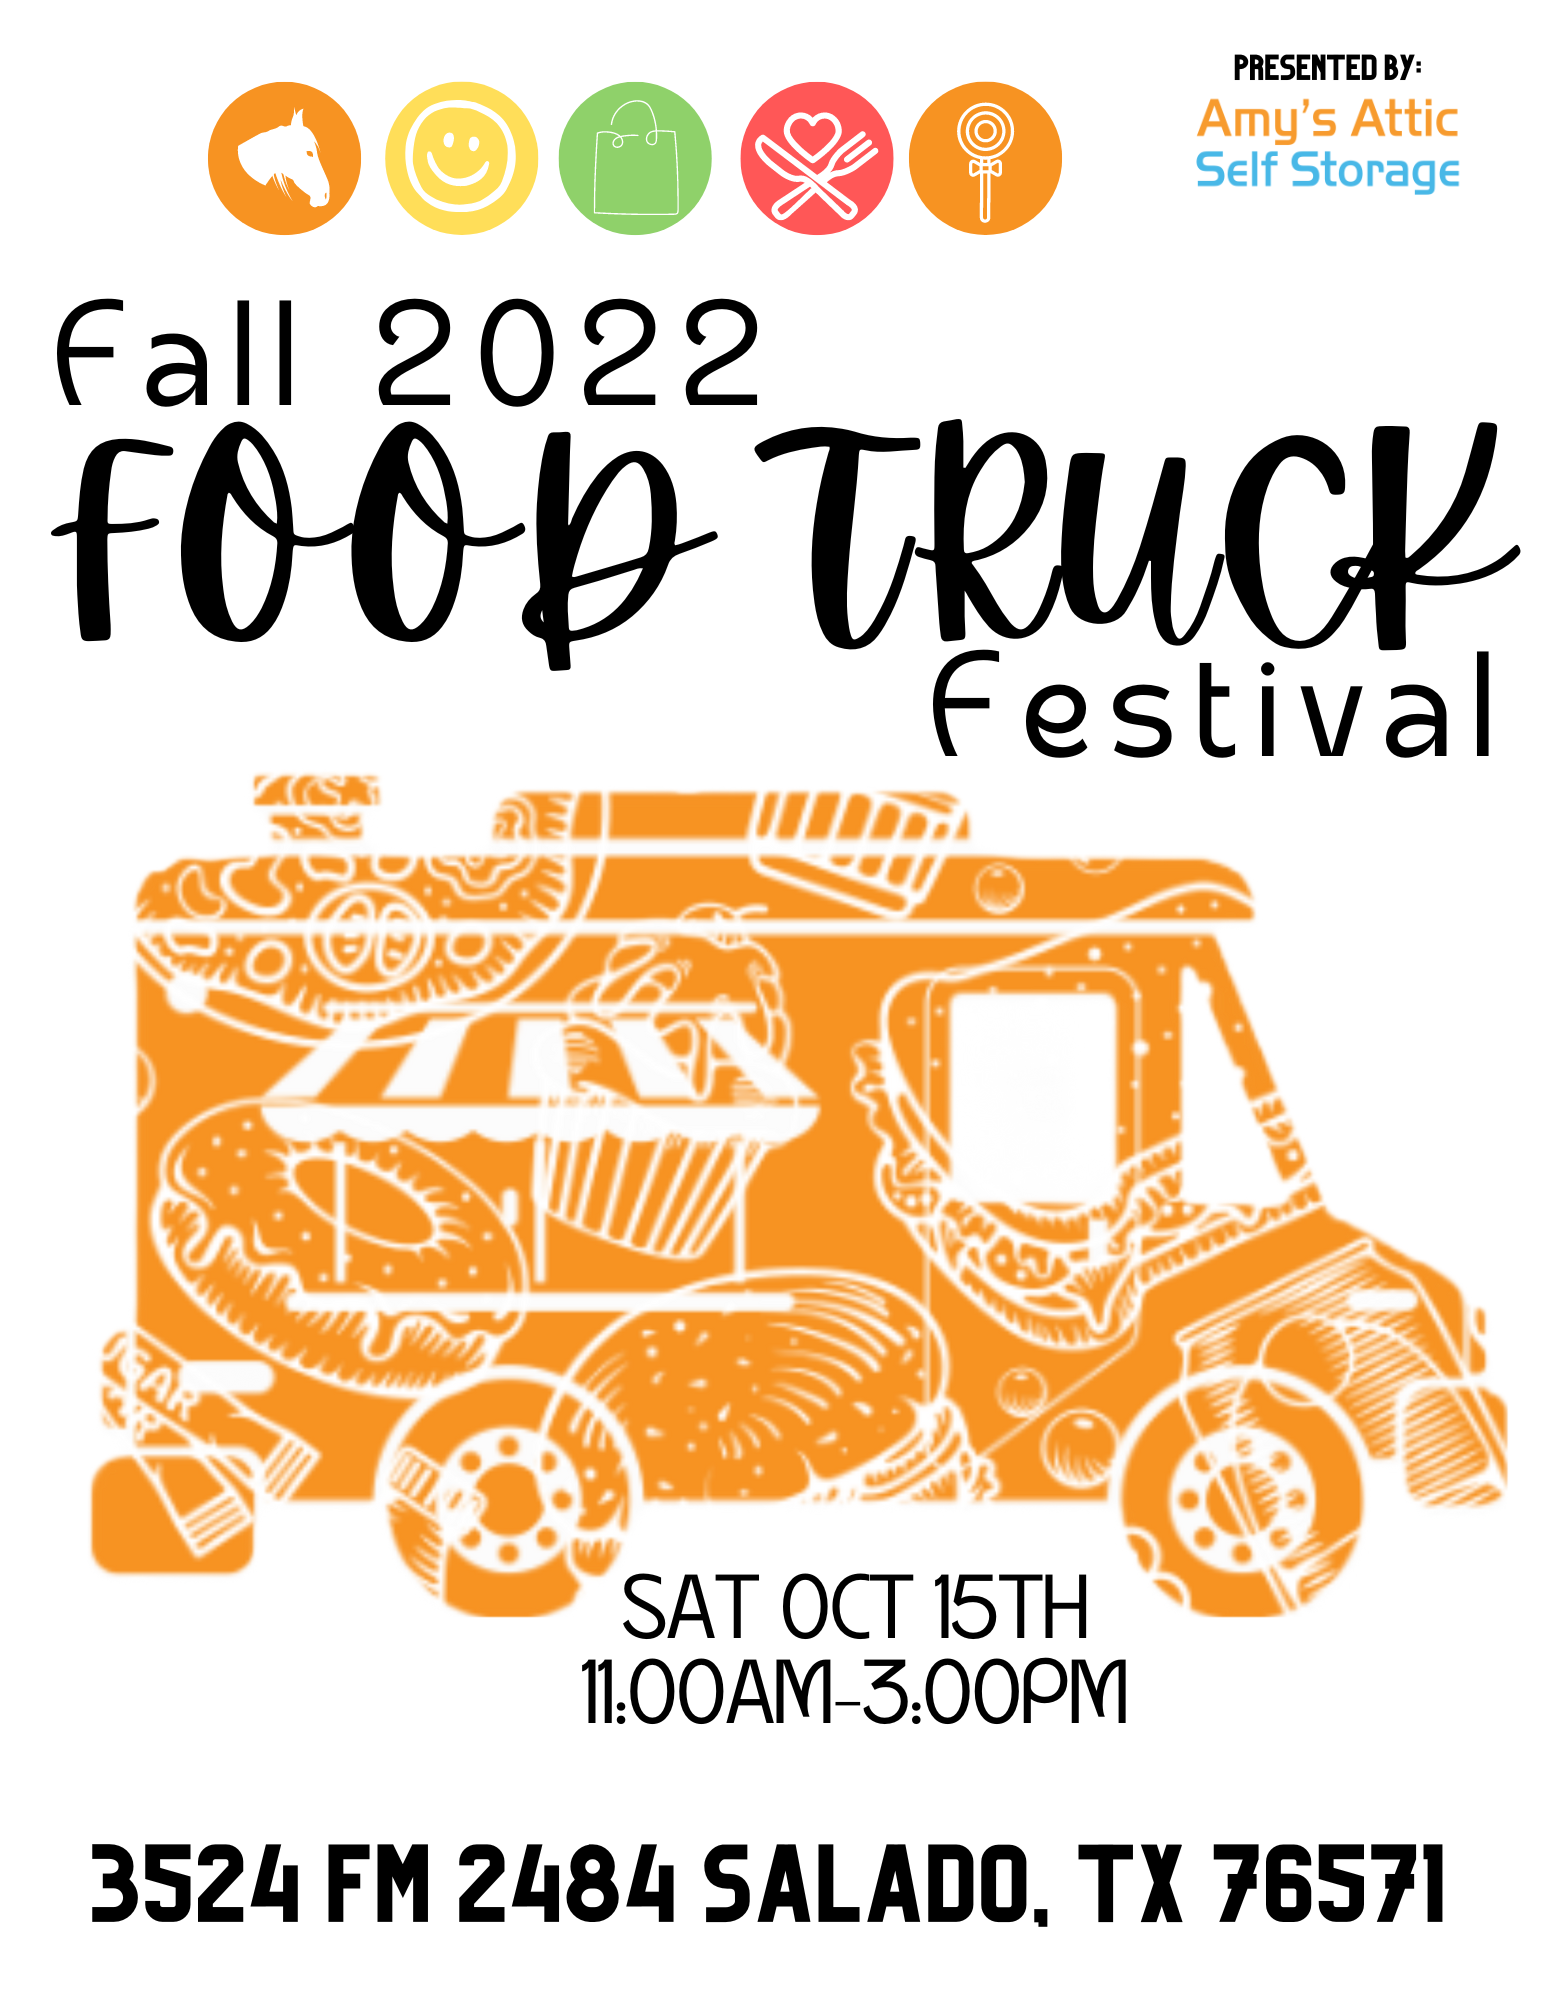 Fall Food Truck Festival 2022